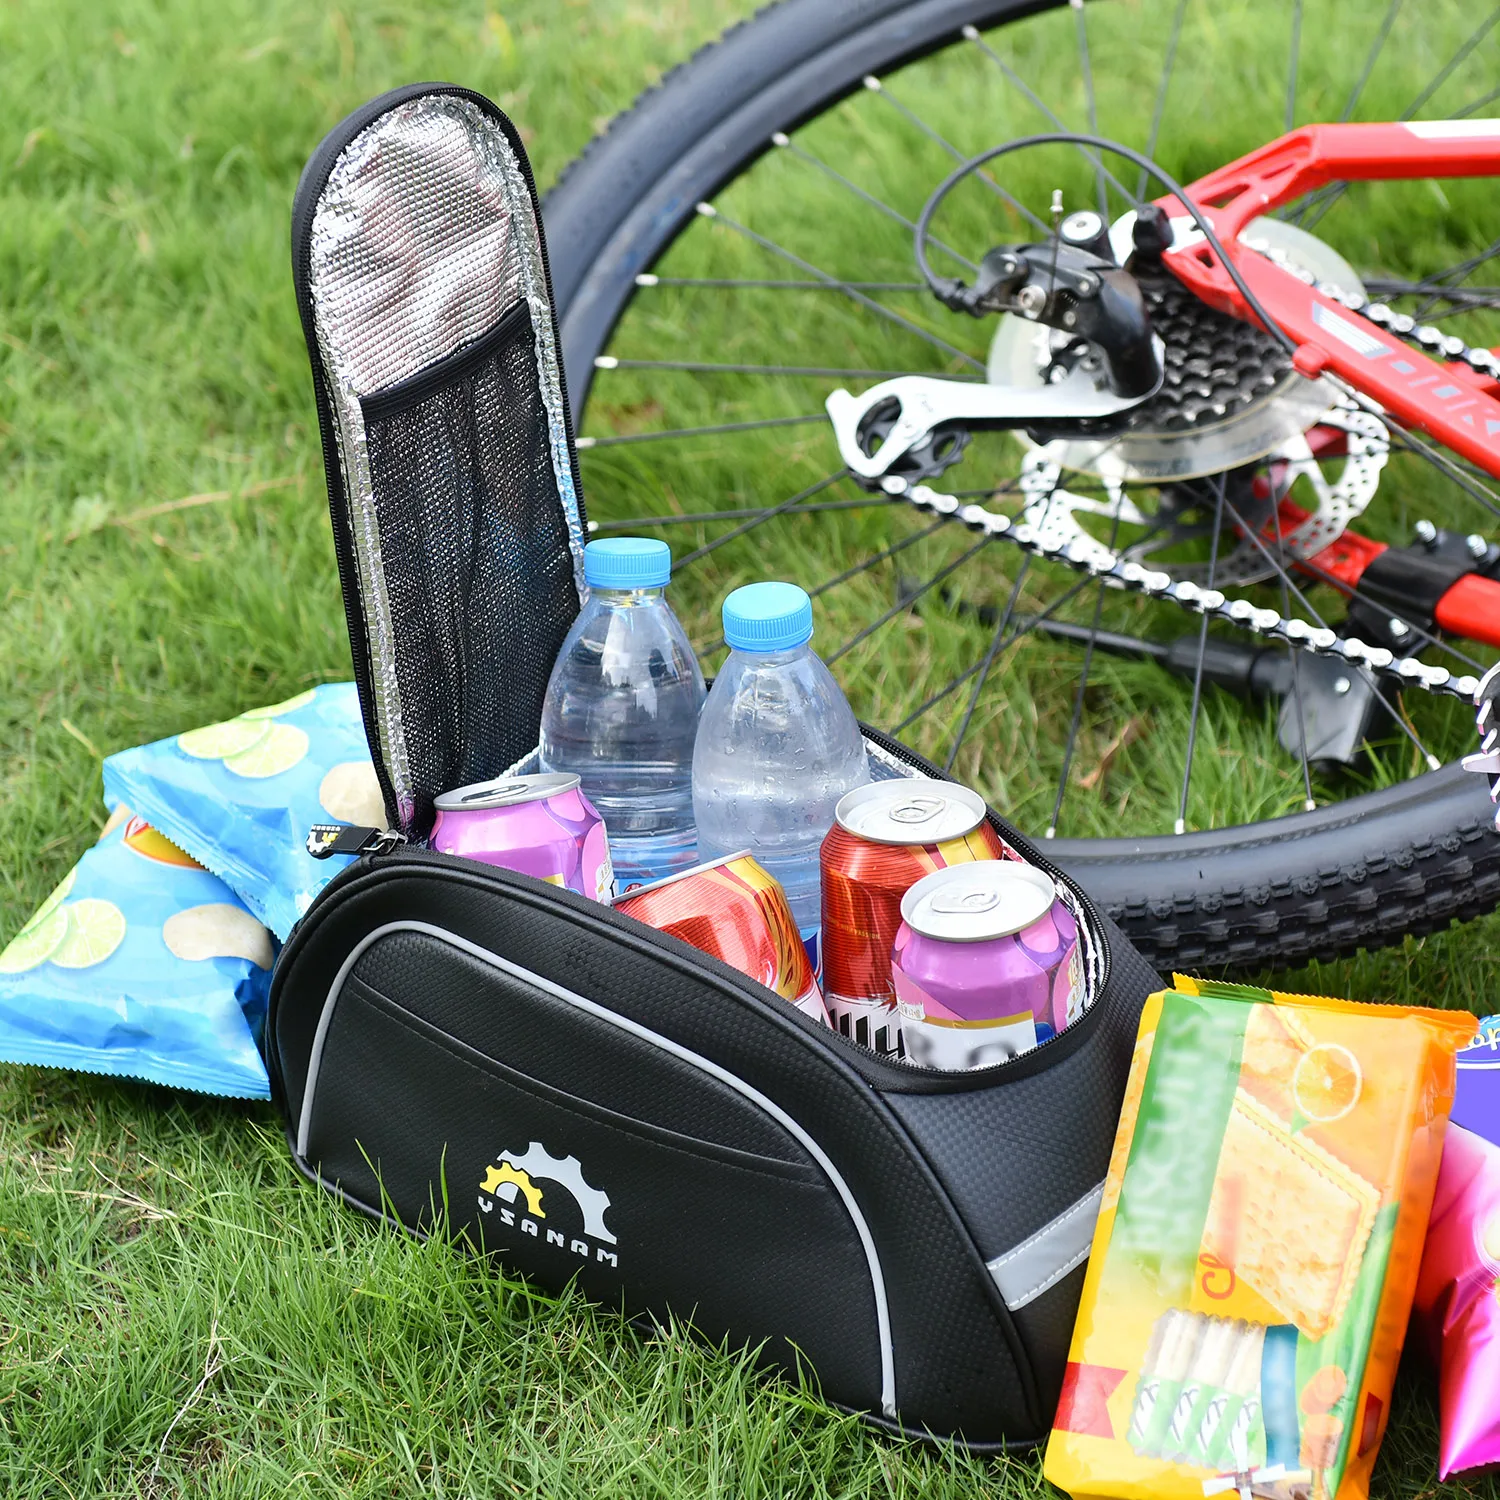 Bike Bag Waterproof Cycling Bicycle Insulated Cooler Bag Mtb Bike Trunk Bag Rear Rack Bags Storage Luggage Carrier Bags Pannier Bicycle Bags Panniers Aliexpress